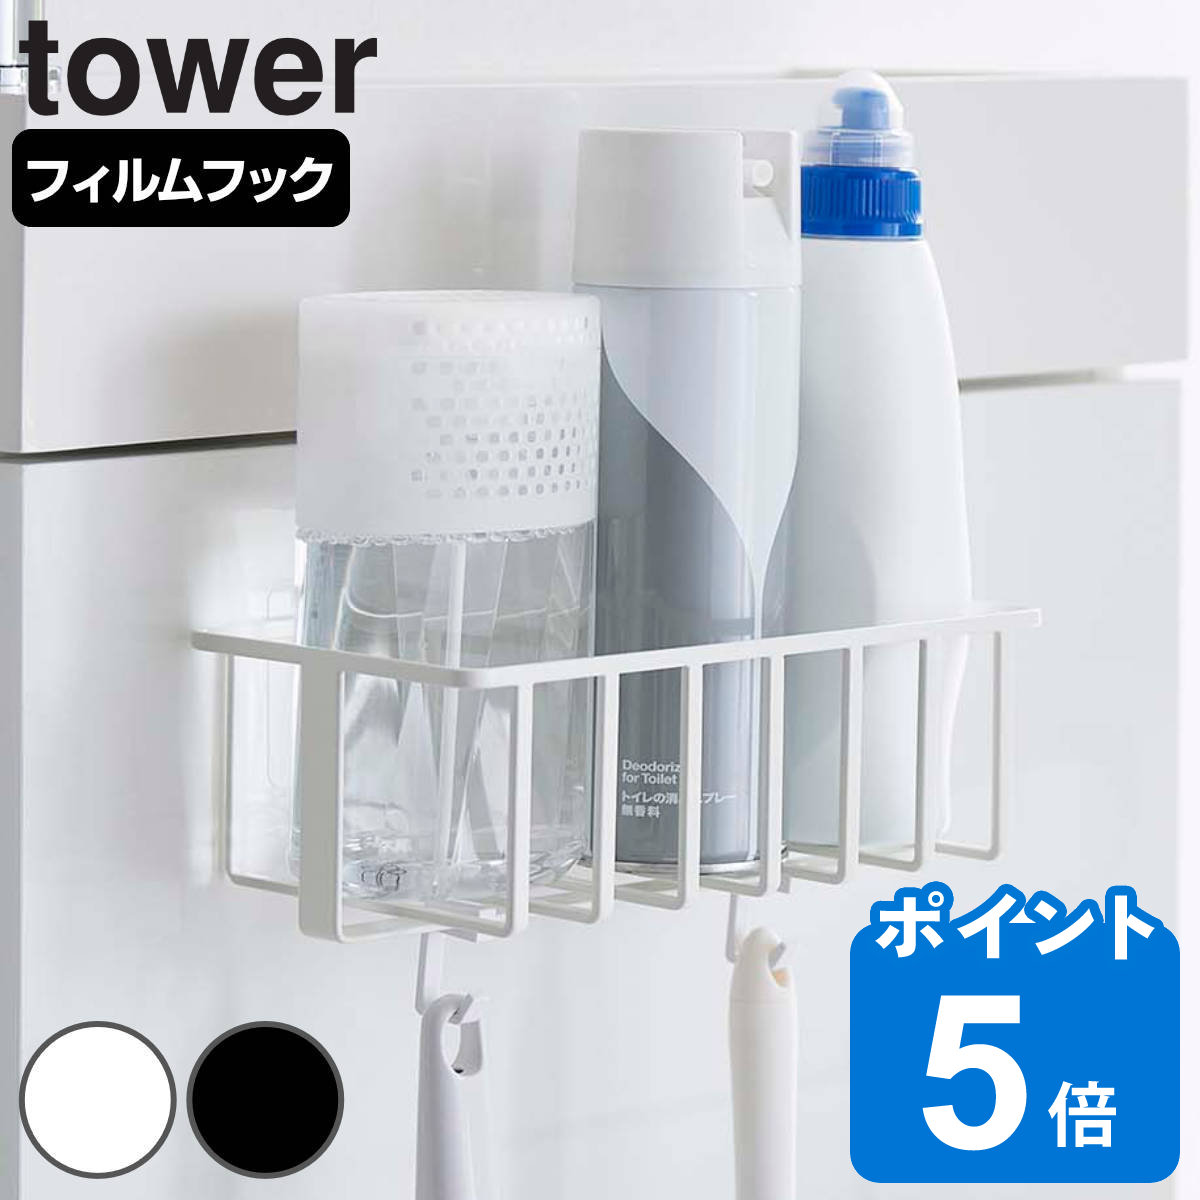 tower フィルムフック トイレ用品収納ラック タワー